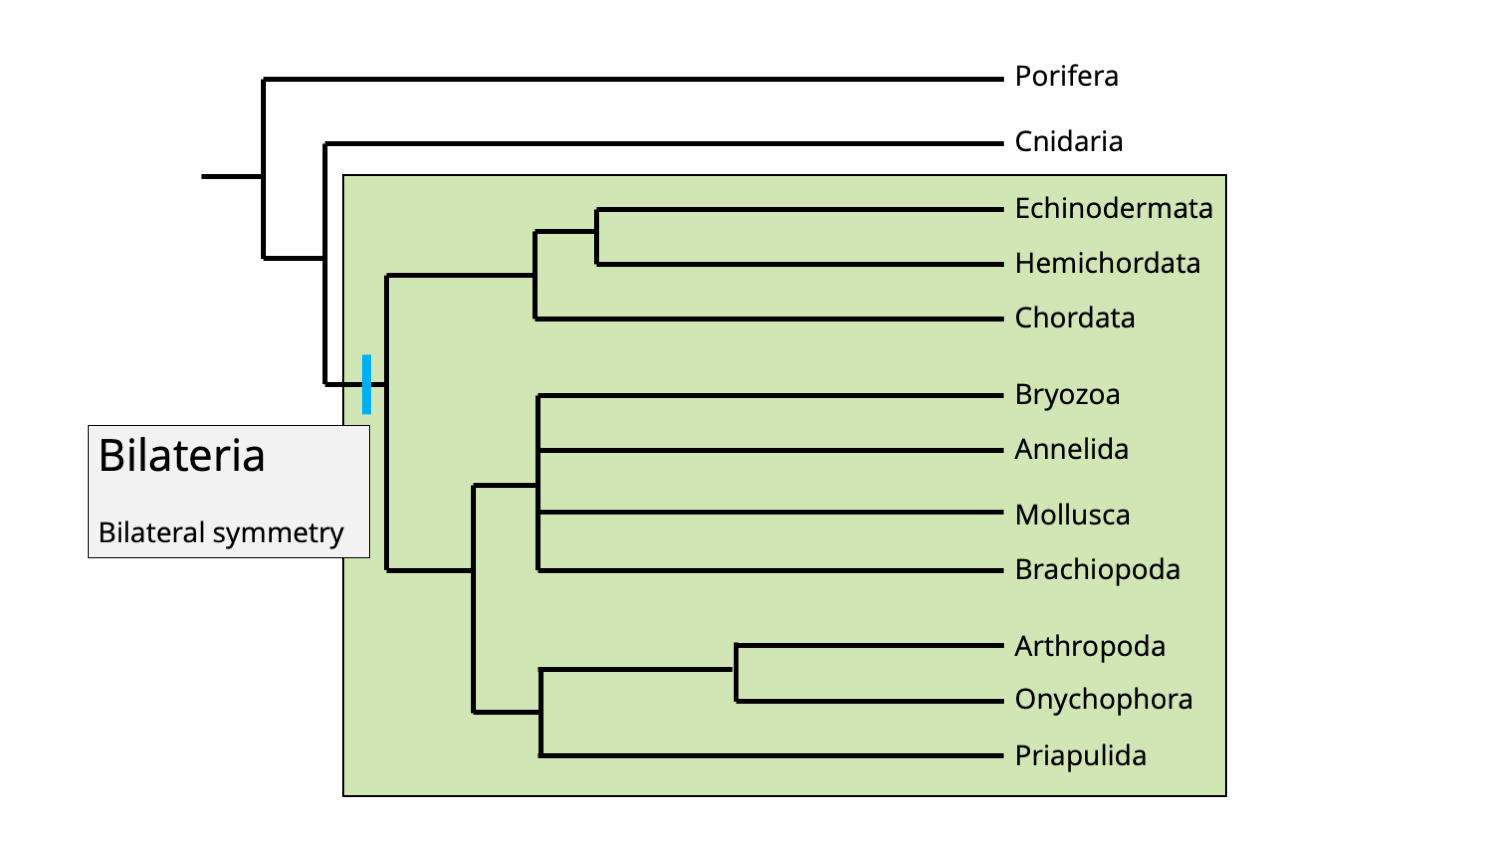 Phylogenetic membership of the Bilateria clade.